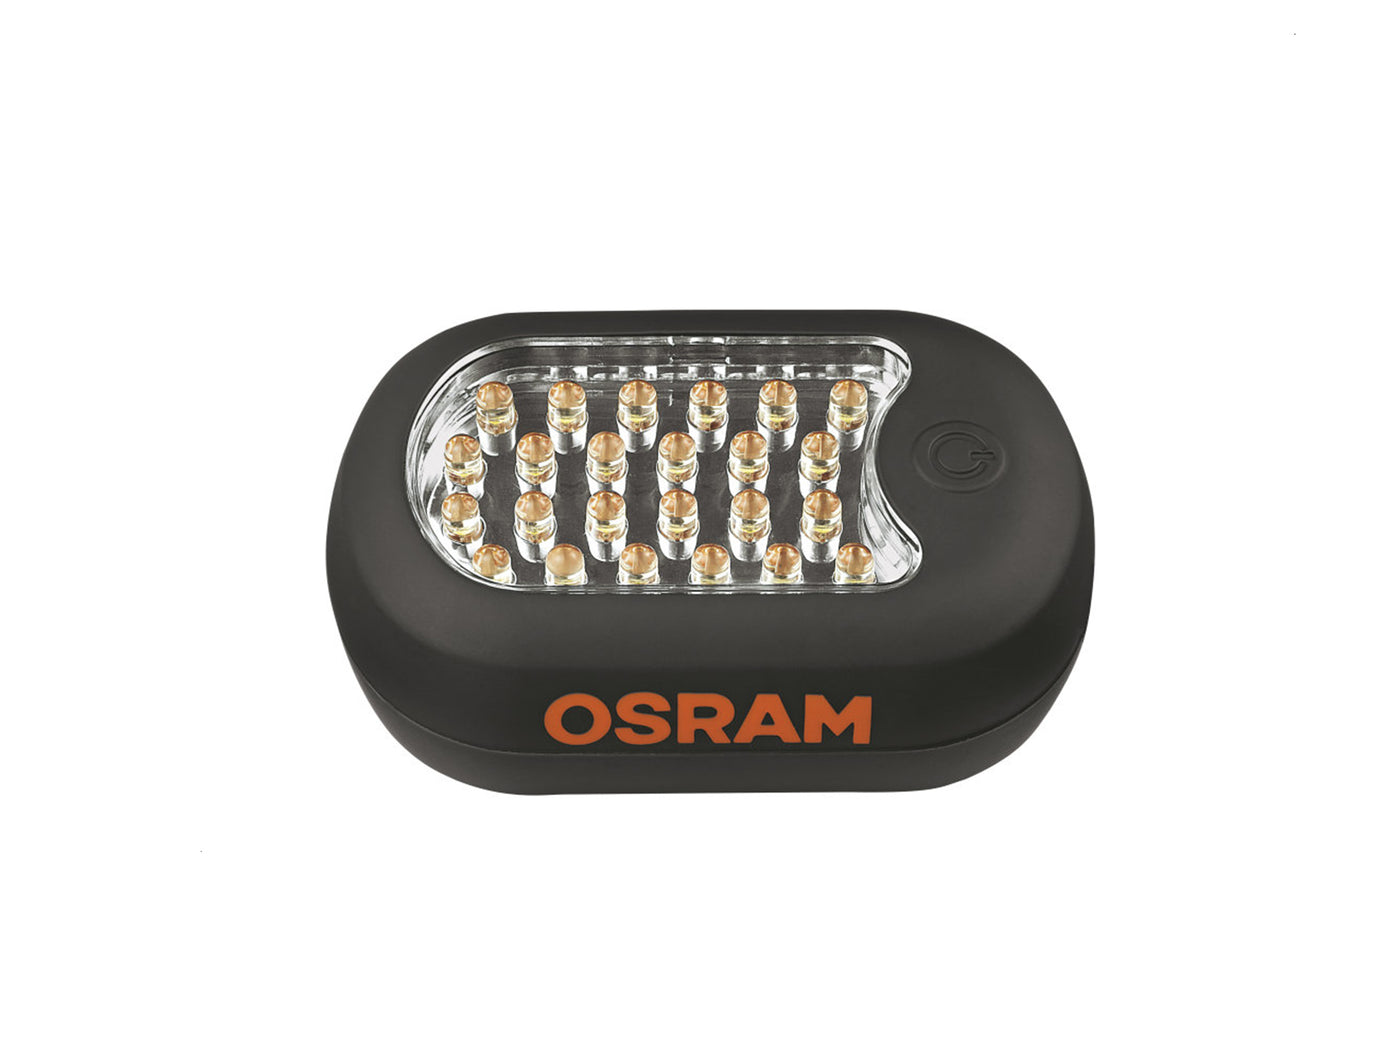 Linterna Led Osram para Carros y uso Personal